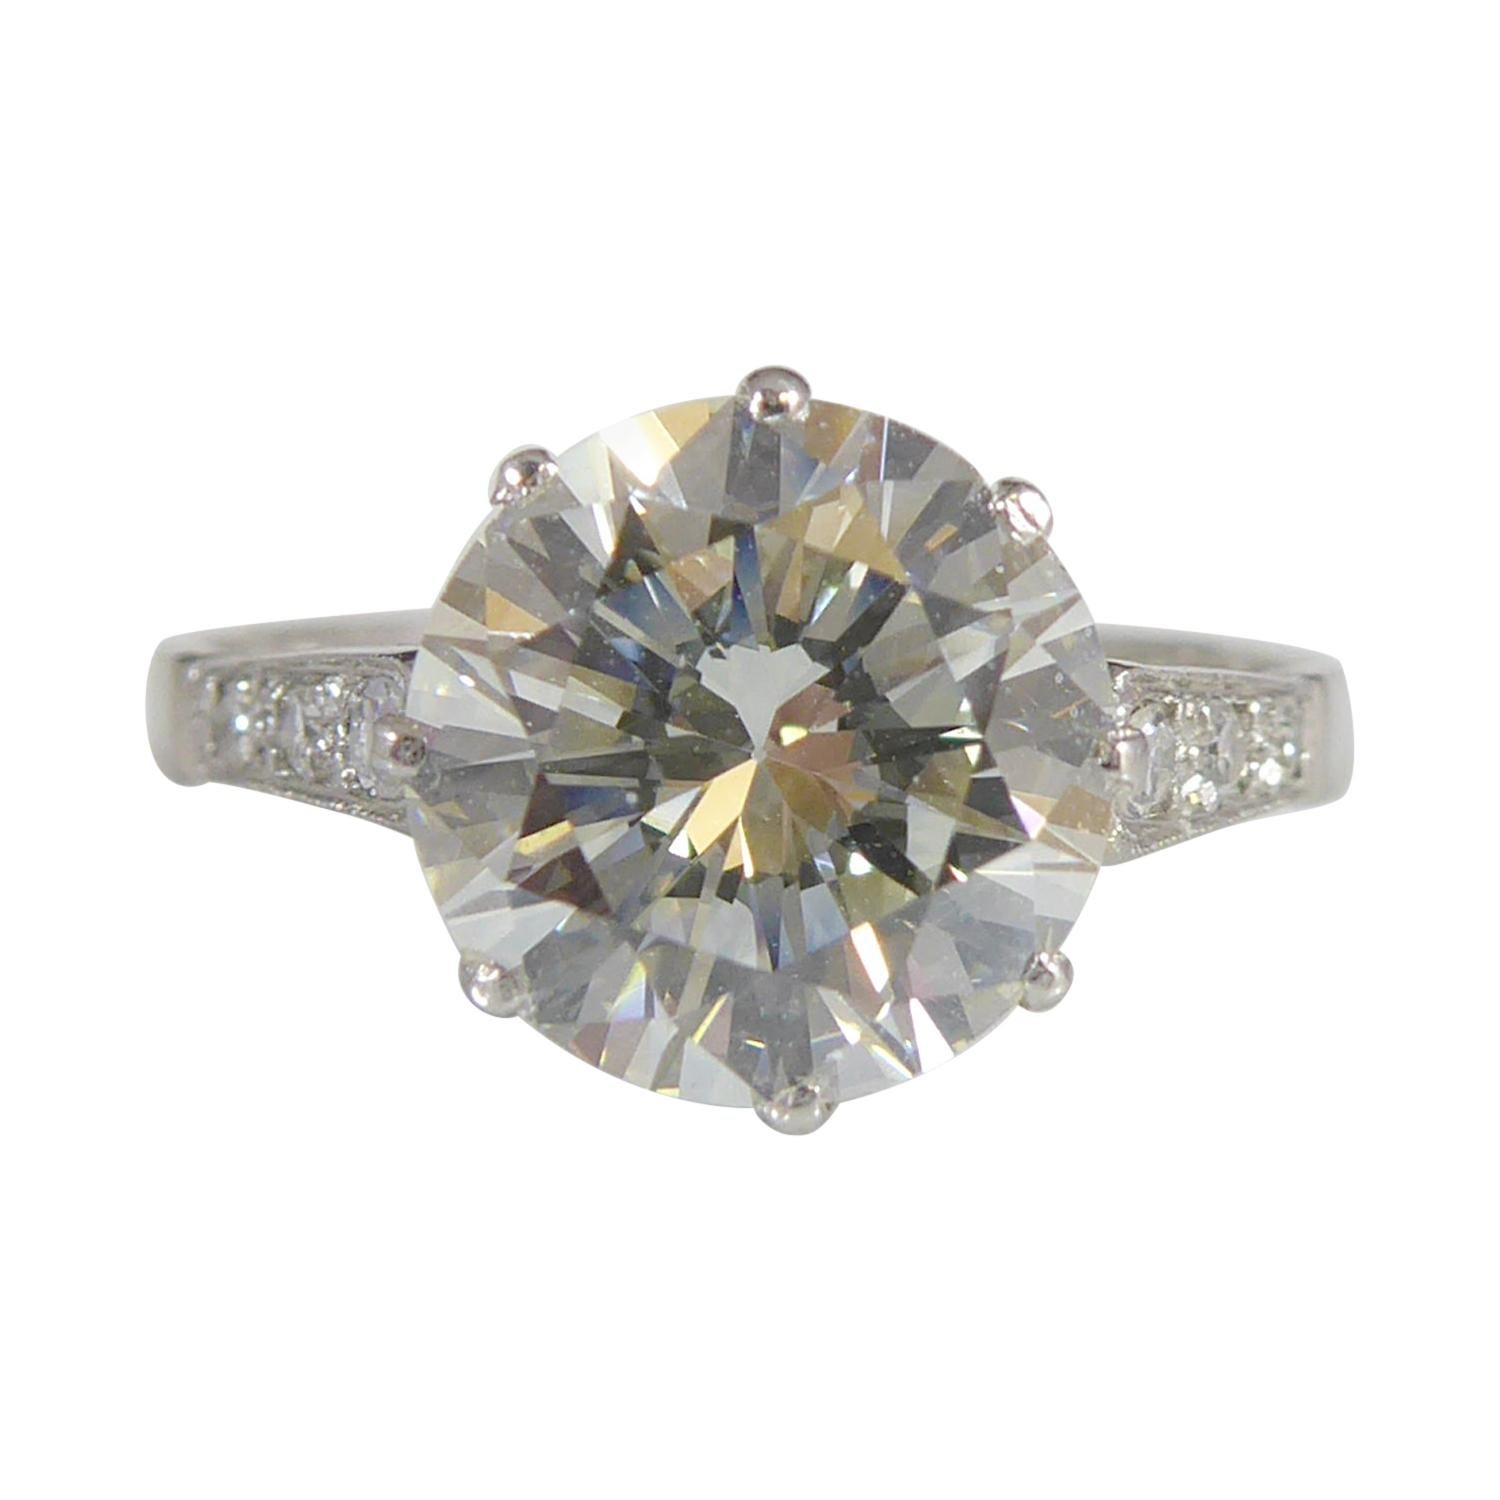 Vintage 2.21 Carat Early Brilliant Cut Diamond Engagement Ring